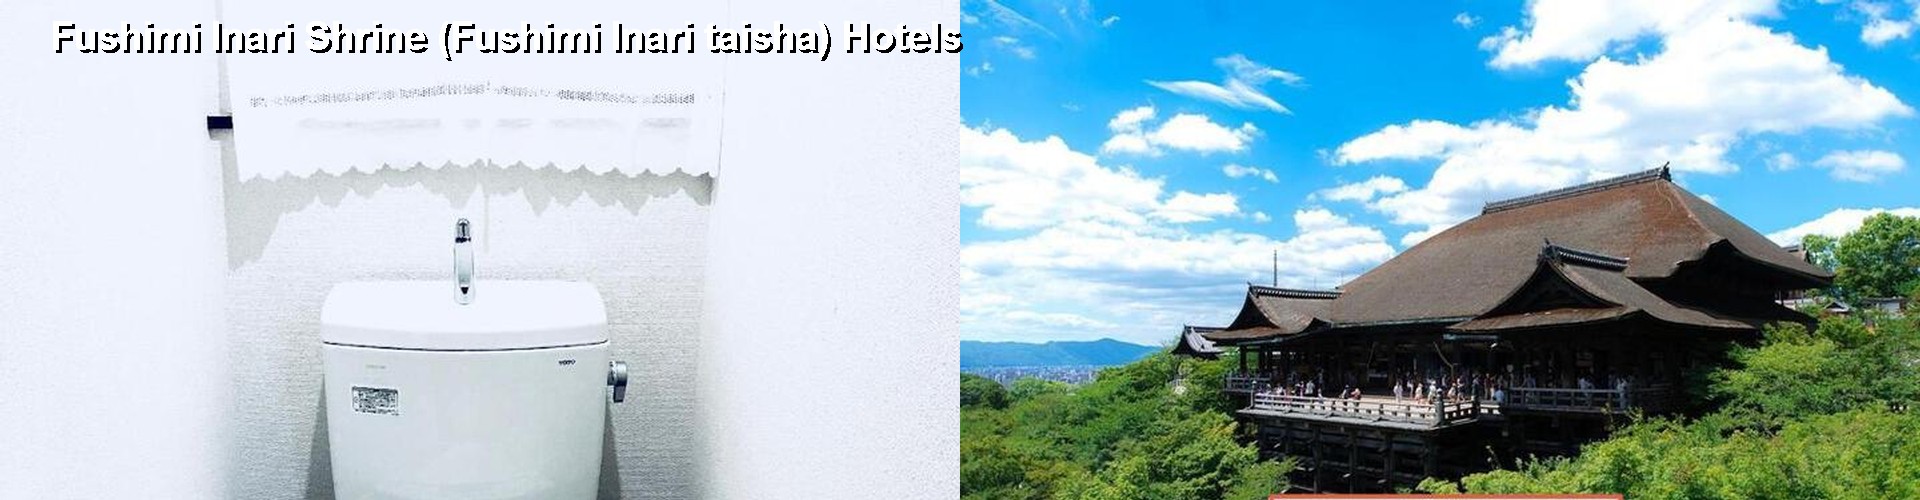 5 Best Hotels near Fushimi Inari Shrine (Fushimi Inari taisha)